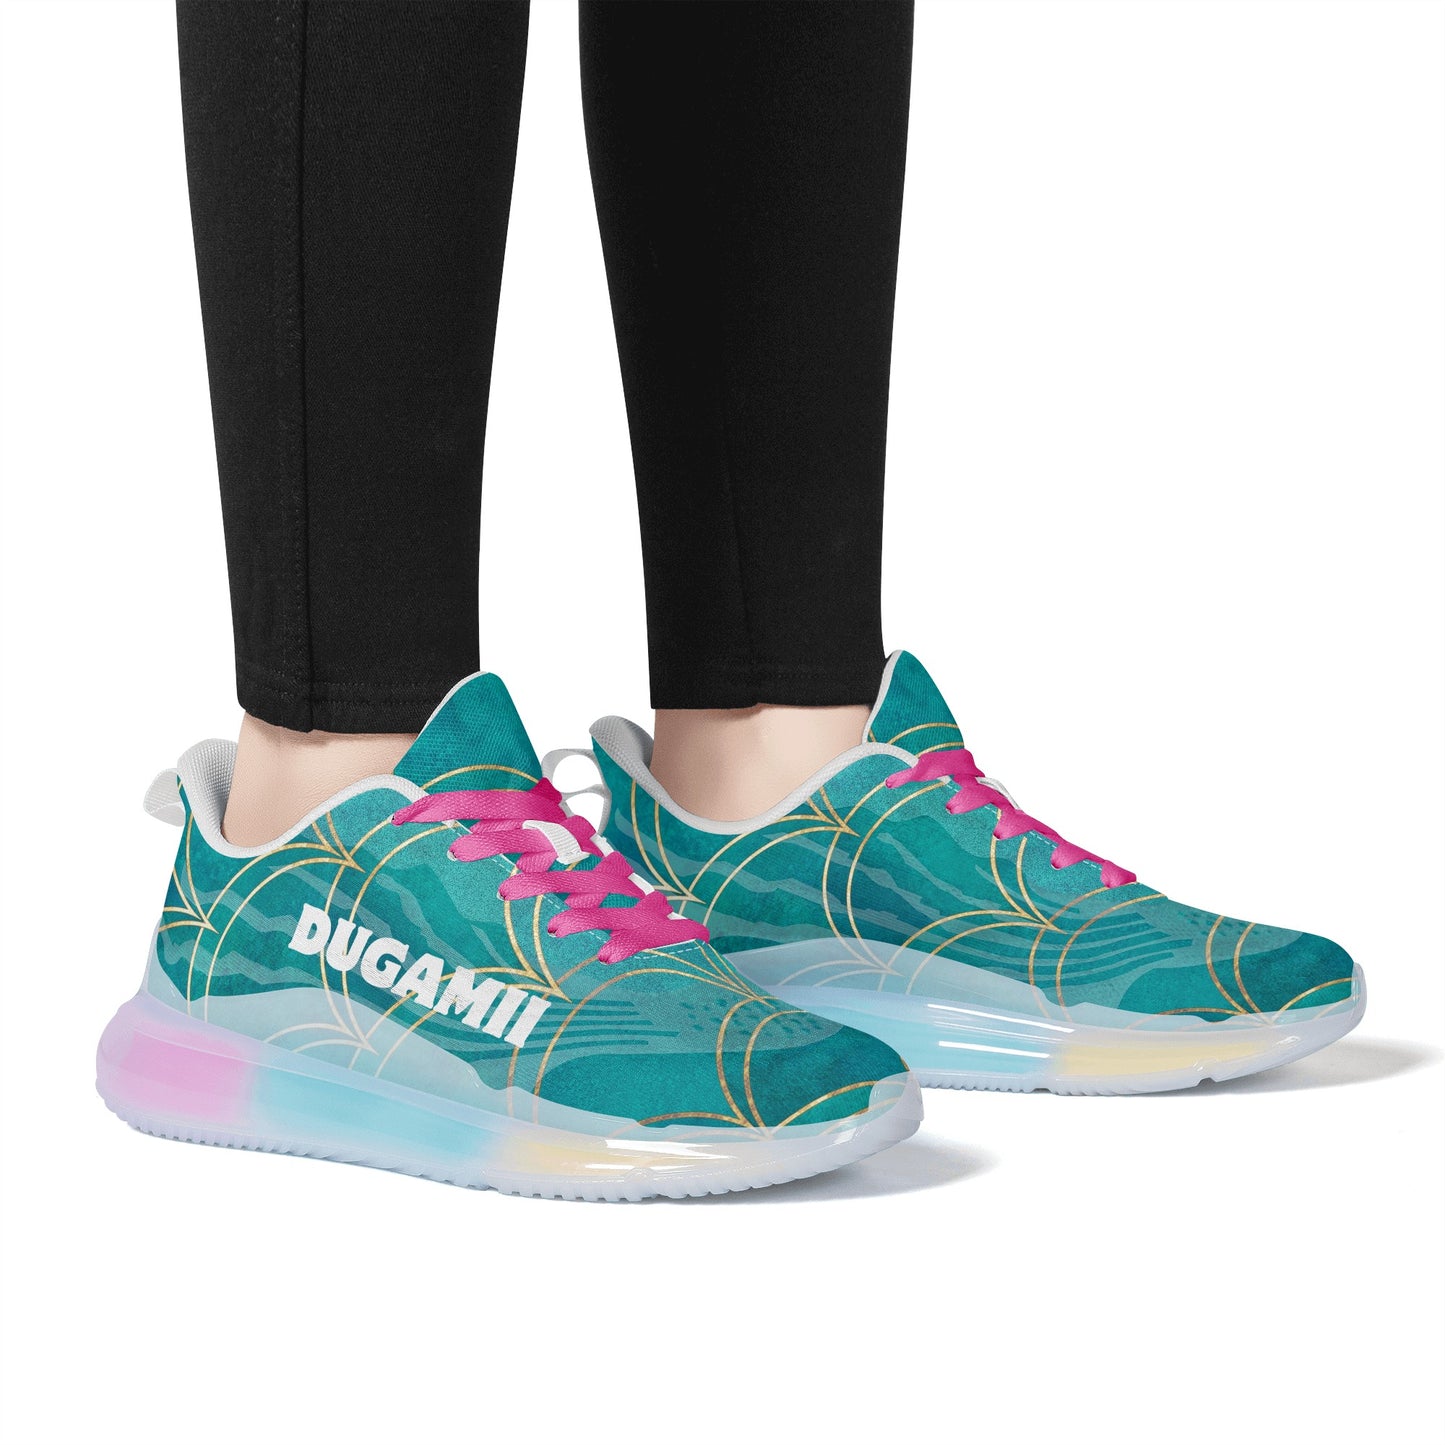 DuGamii Women's Rainbow Cotton Candy Running Shoes